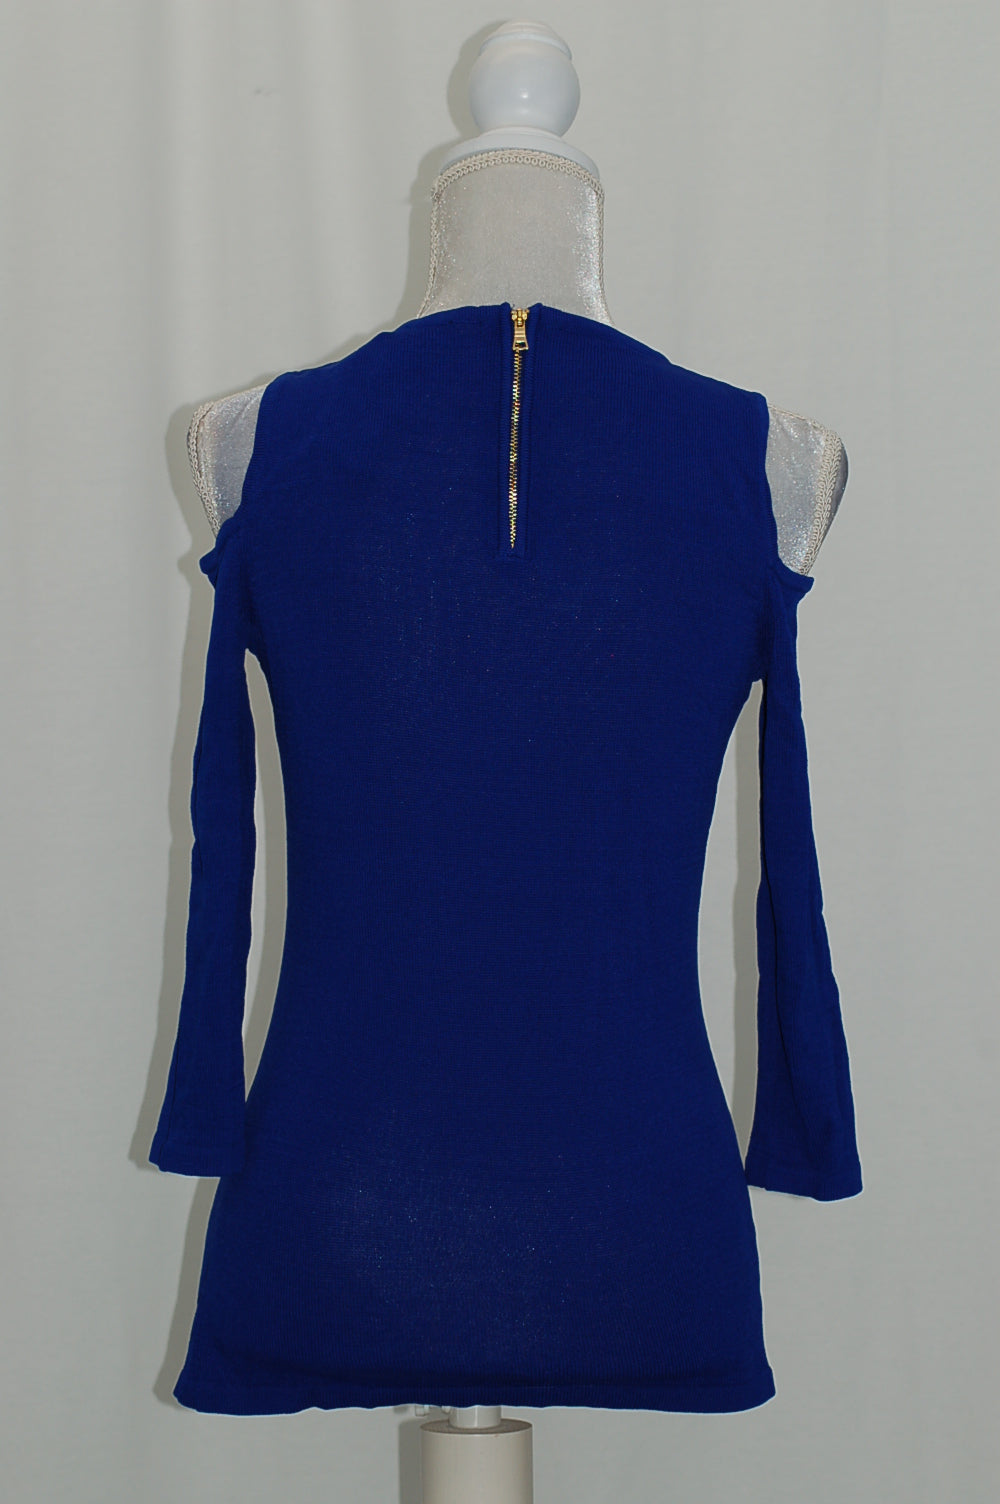 INC International Concepts Petite Cold-Shoulder Sweater Goddess Blue PS